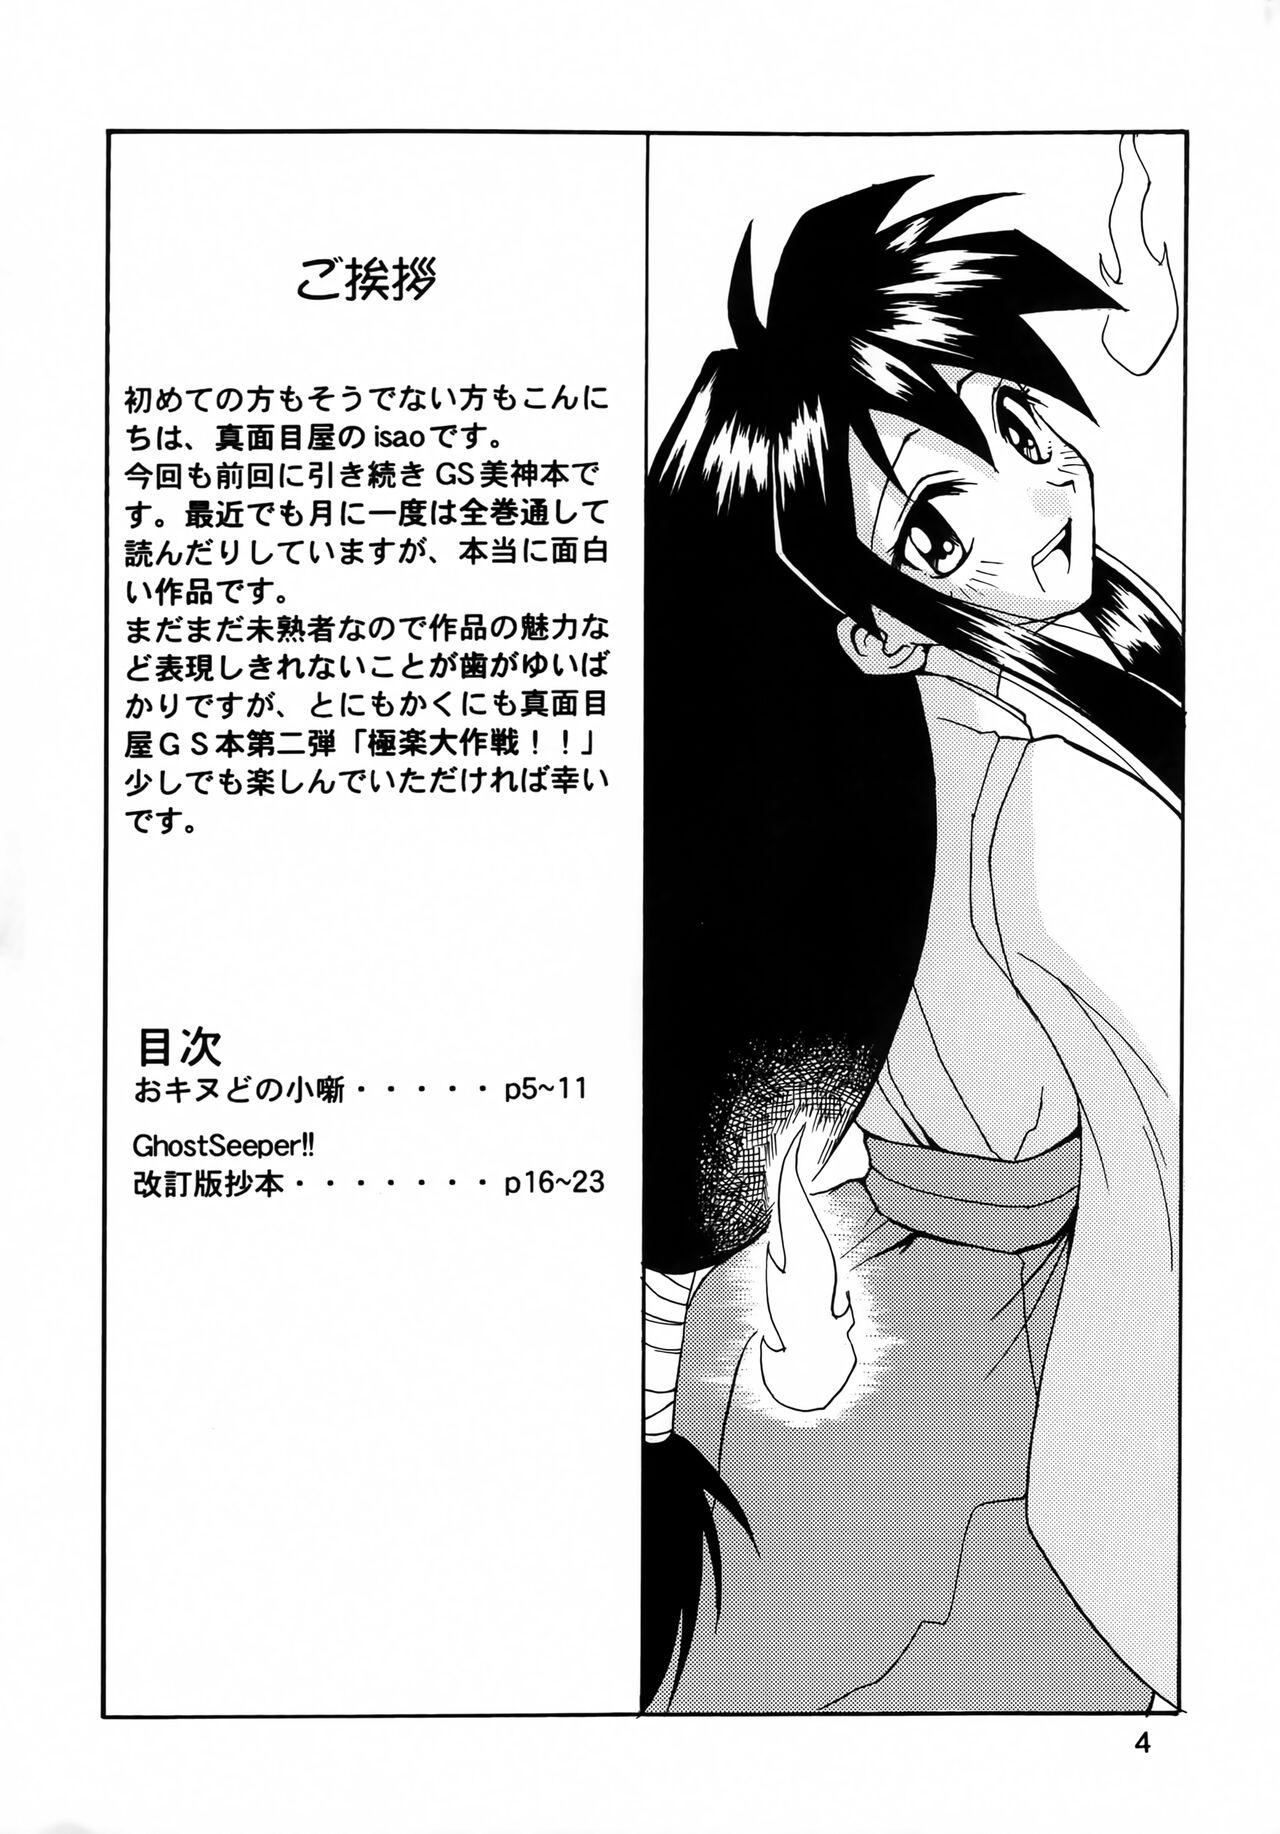 Gordinha GhostSweeper!! 2 Gokuraku Daisakusen!! - Ghost sweeper mikami Ffm - Page 3